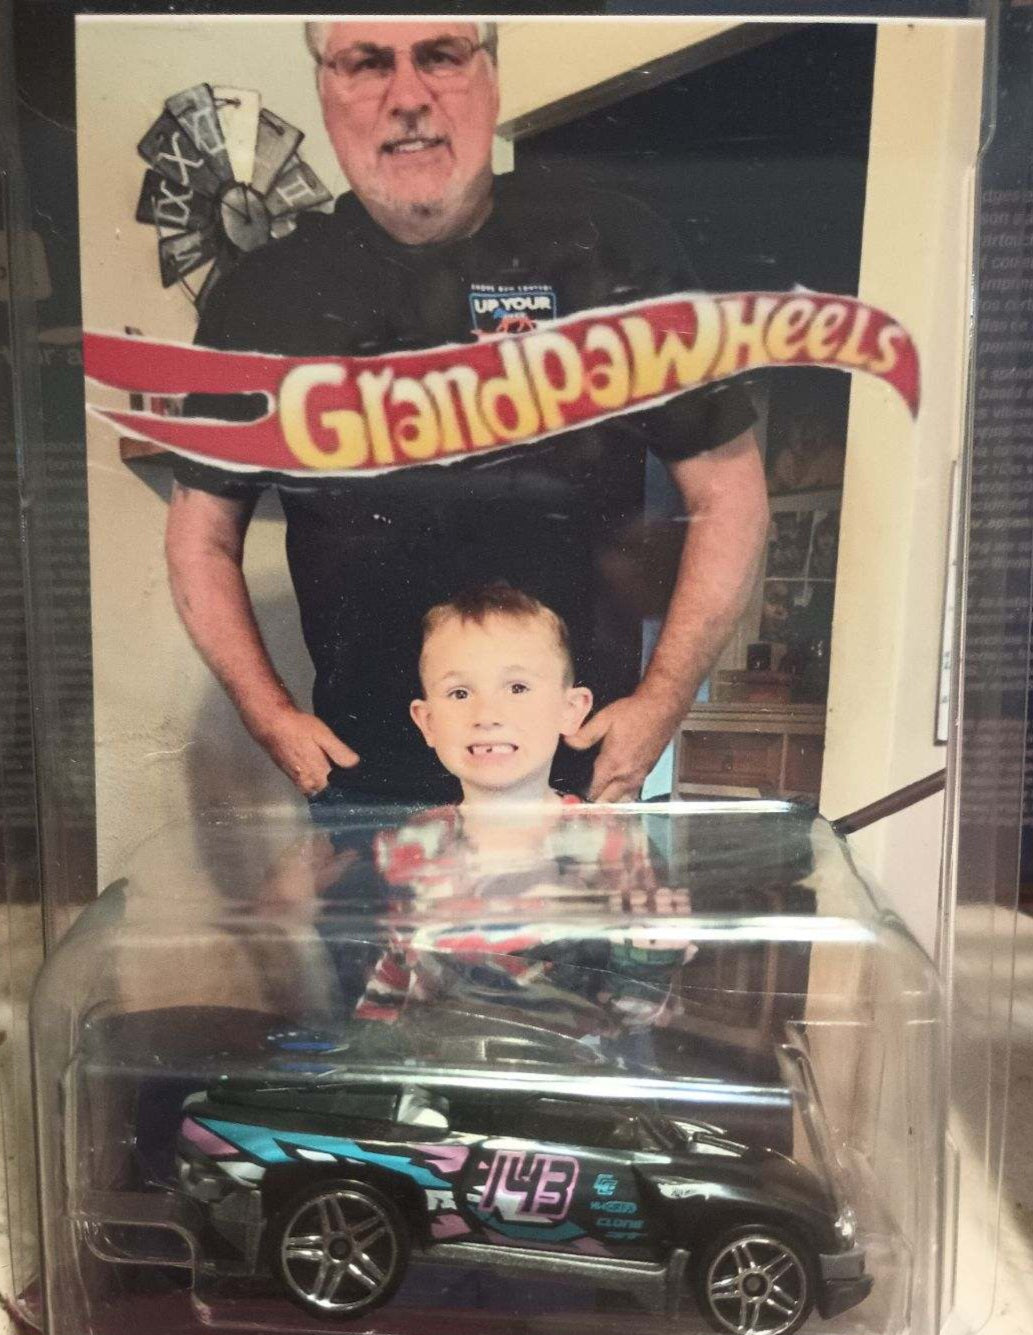 Dad Wheels /Grandpa wheels